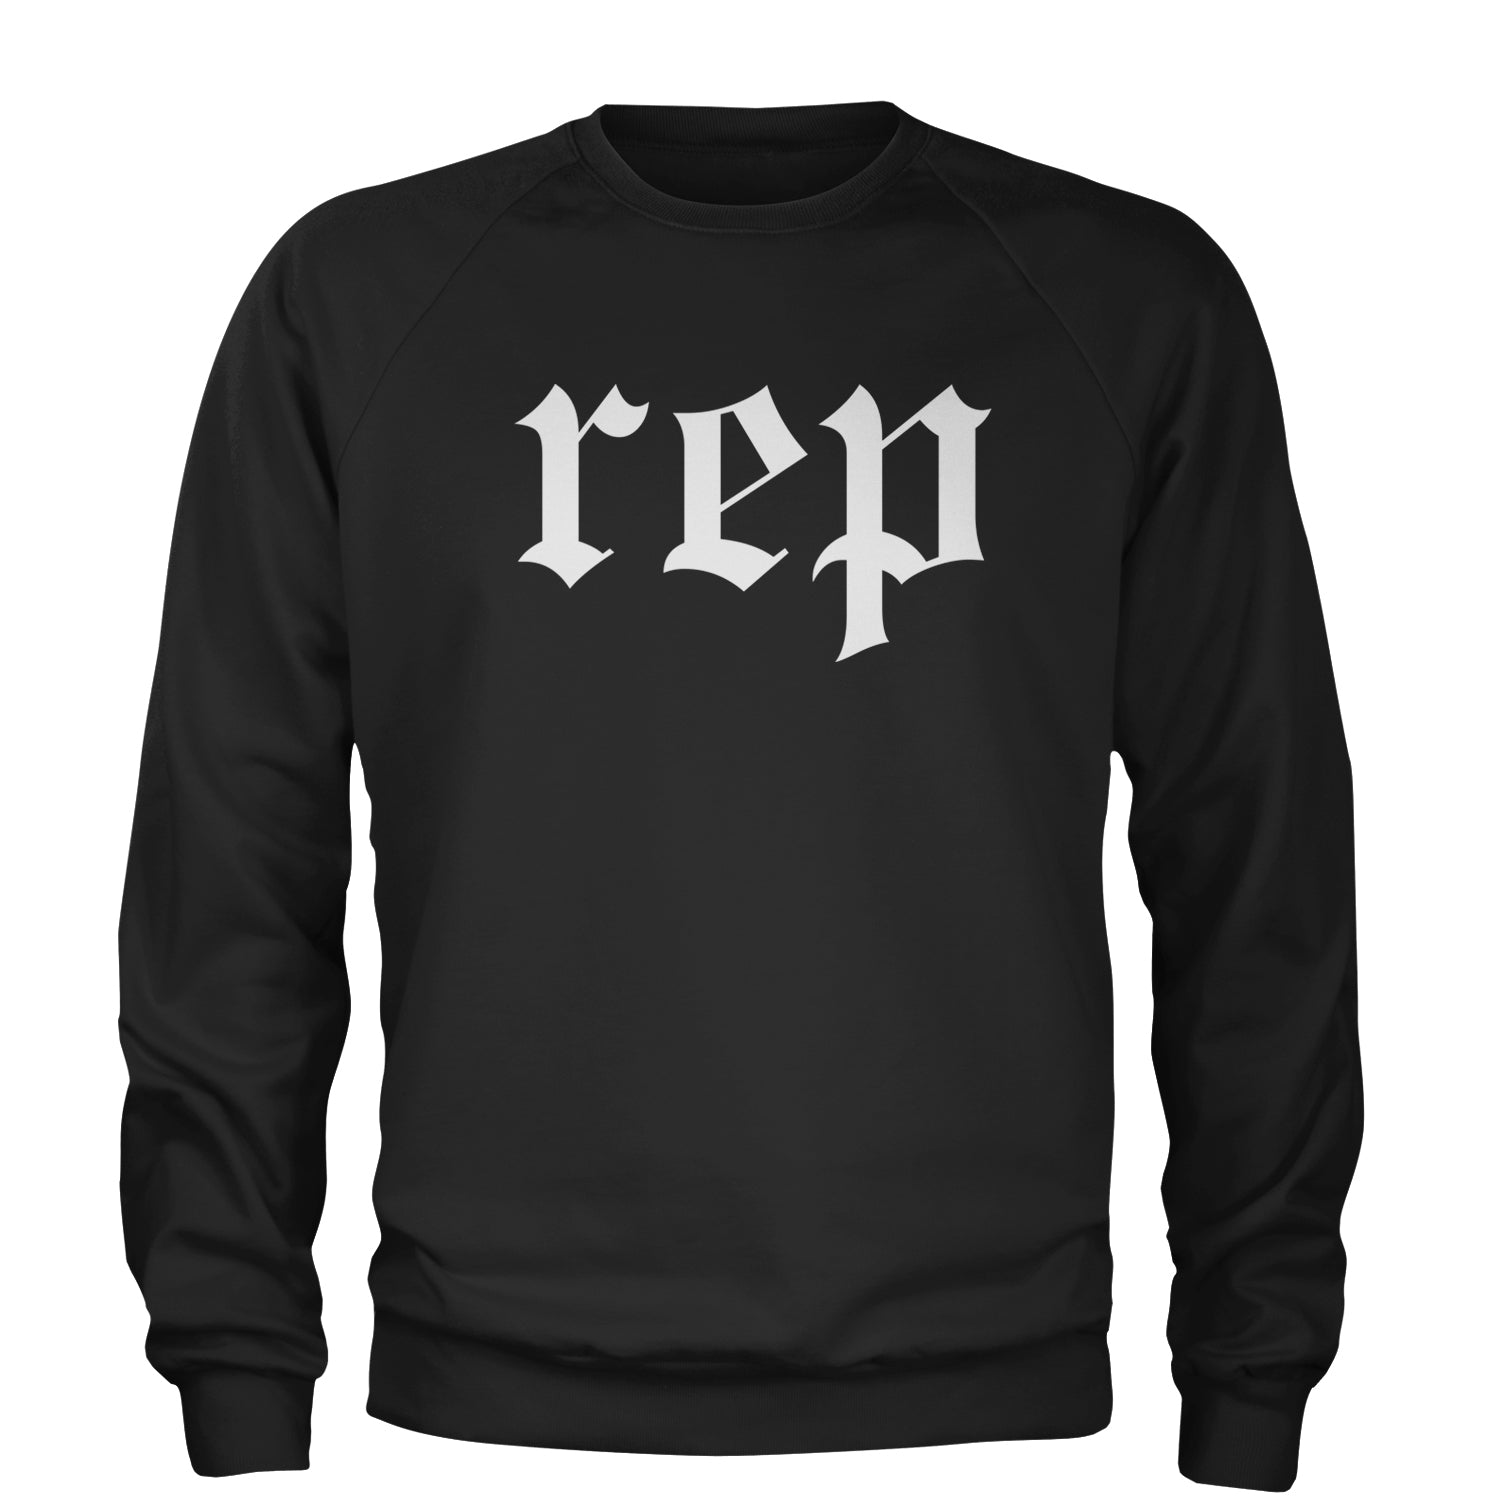 REP Reputation Music Lover Gift Fan Favorite Adult Crewneck Sweatshirt